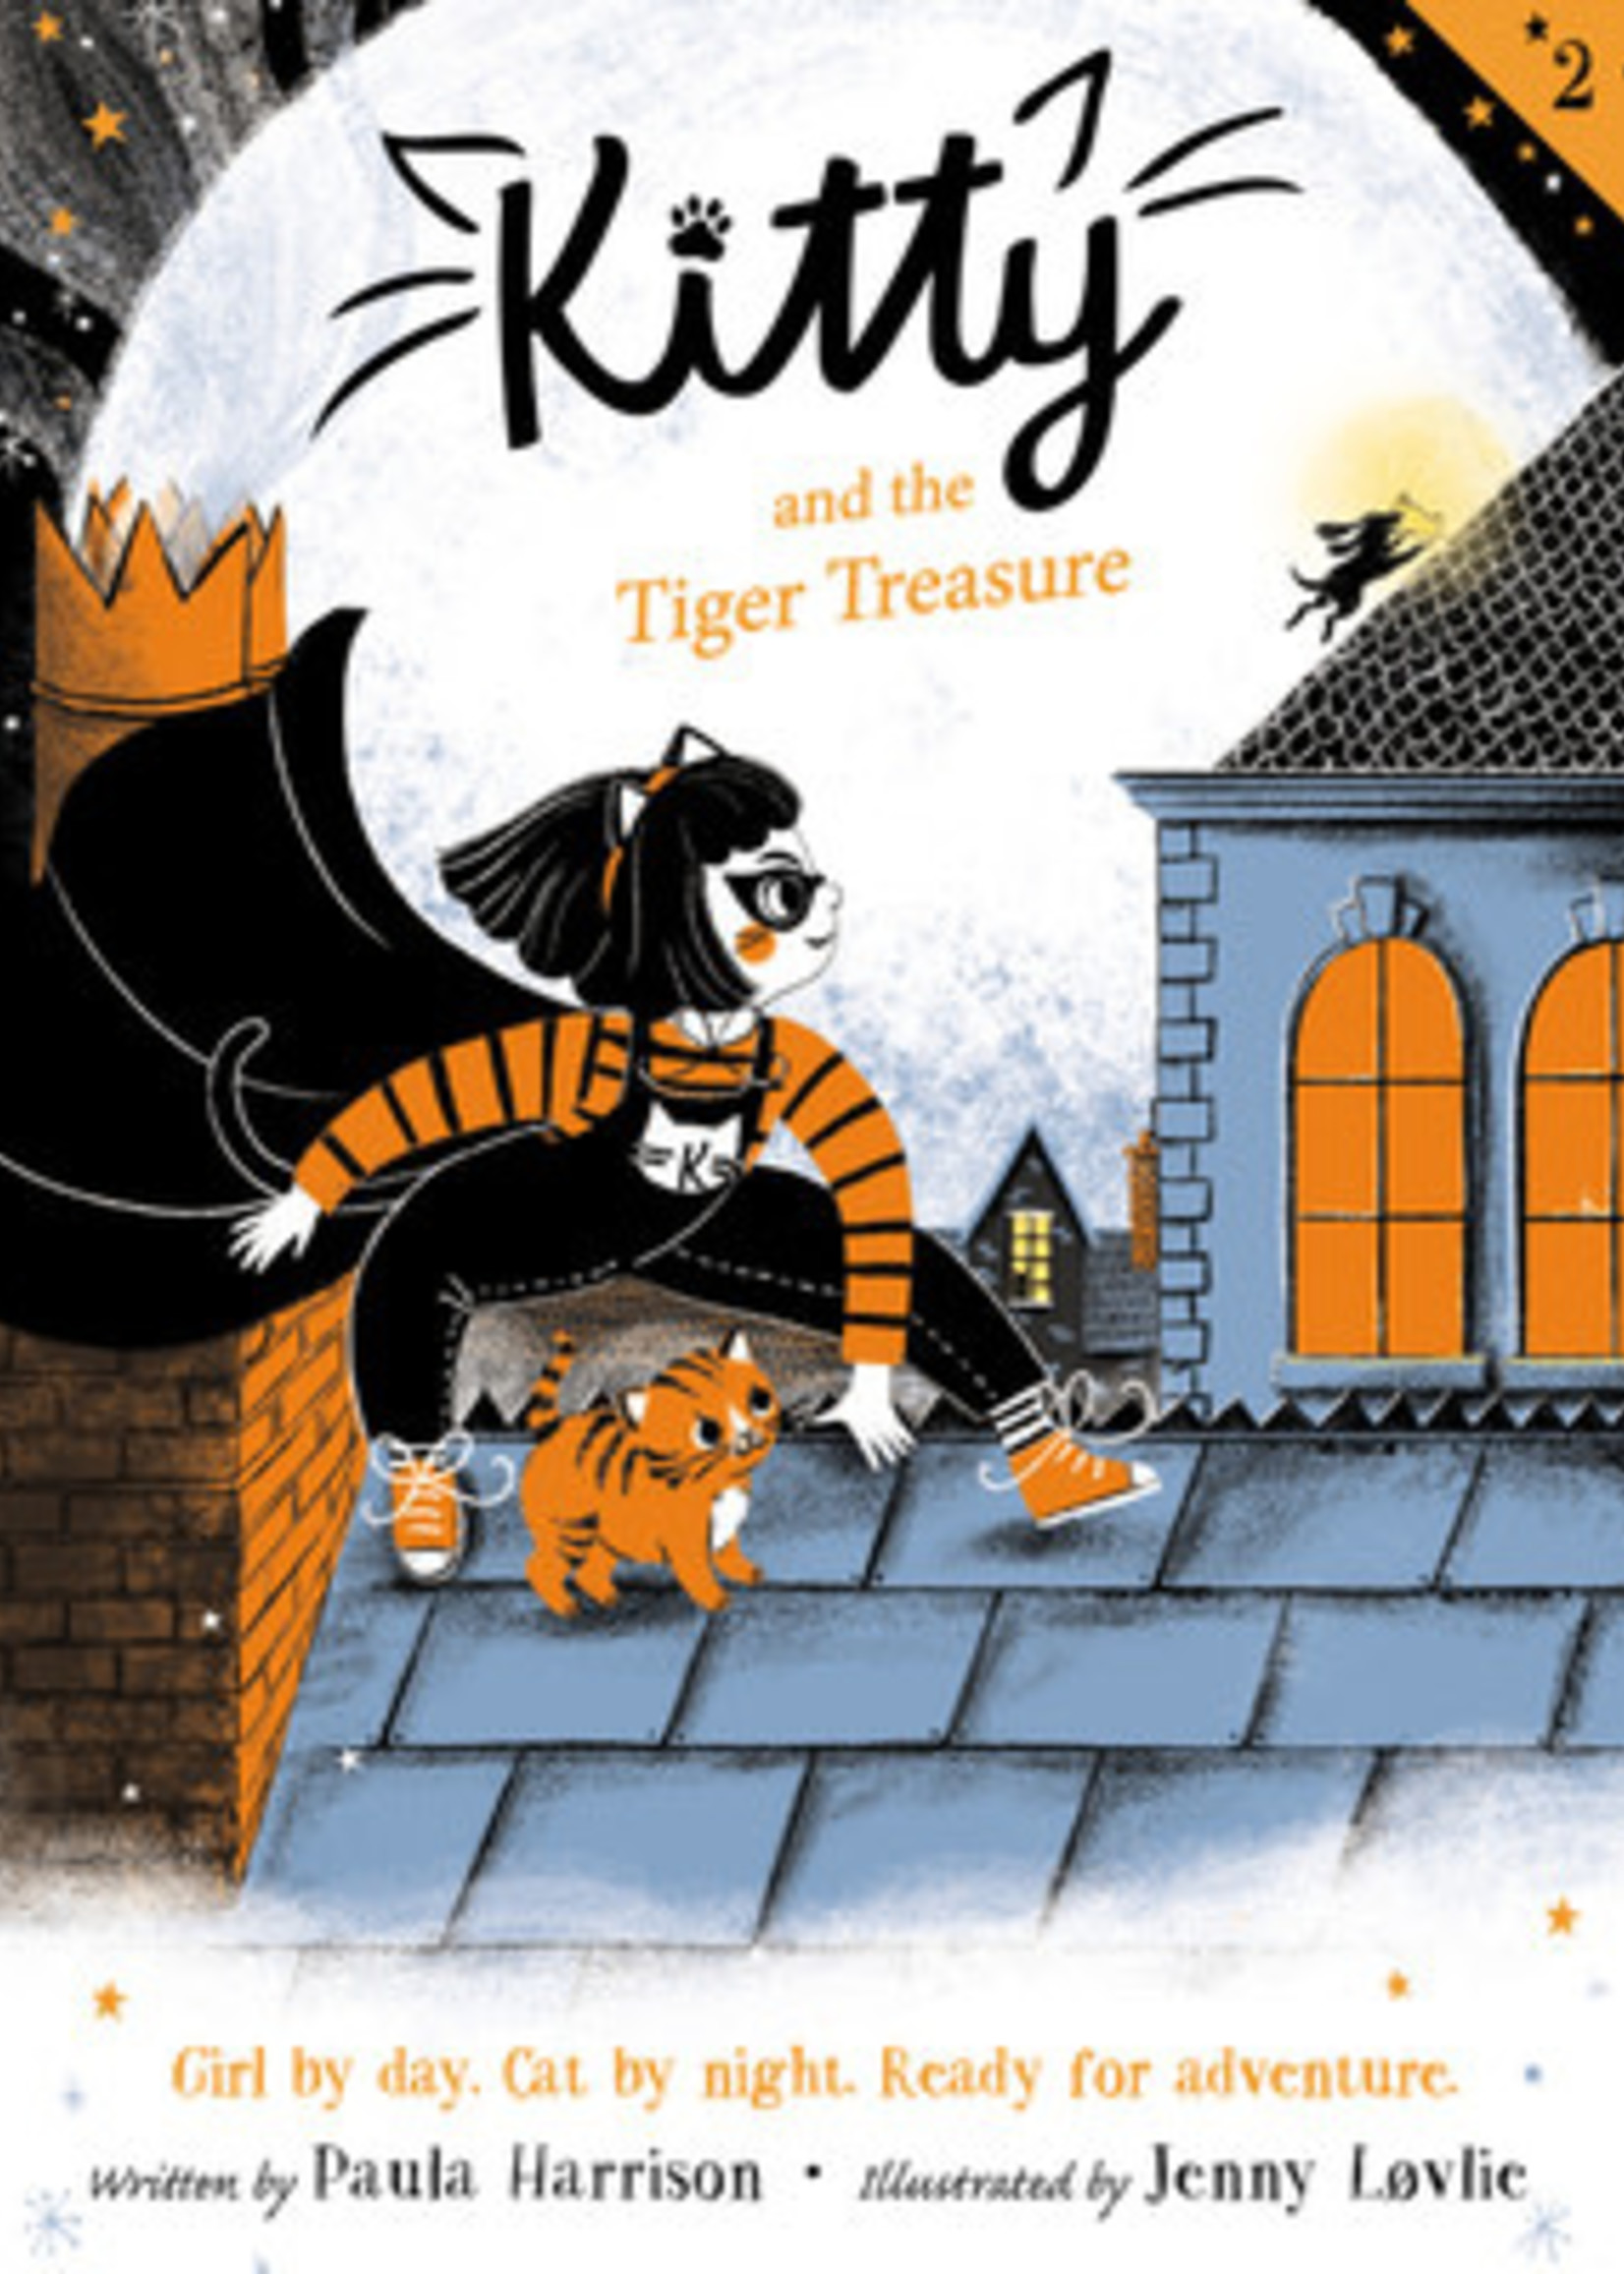 Kitty and the Tiger Treasure (Kitty #2) by Paula Harrison